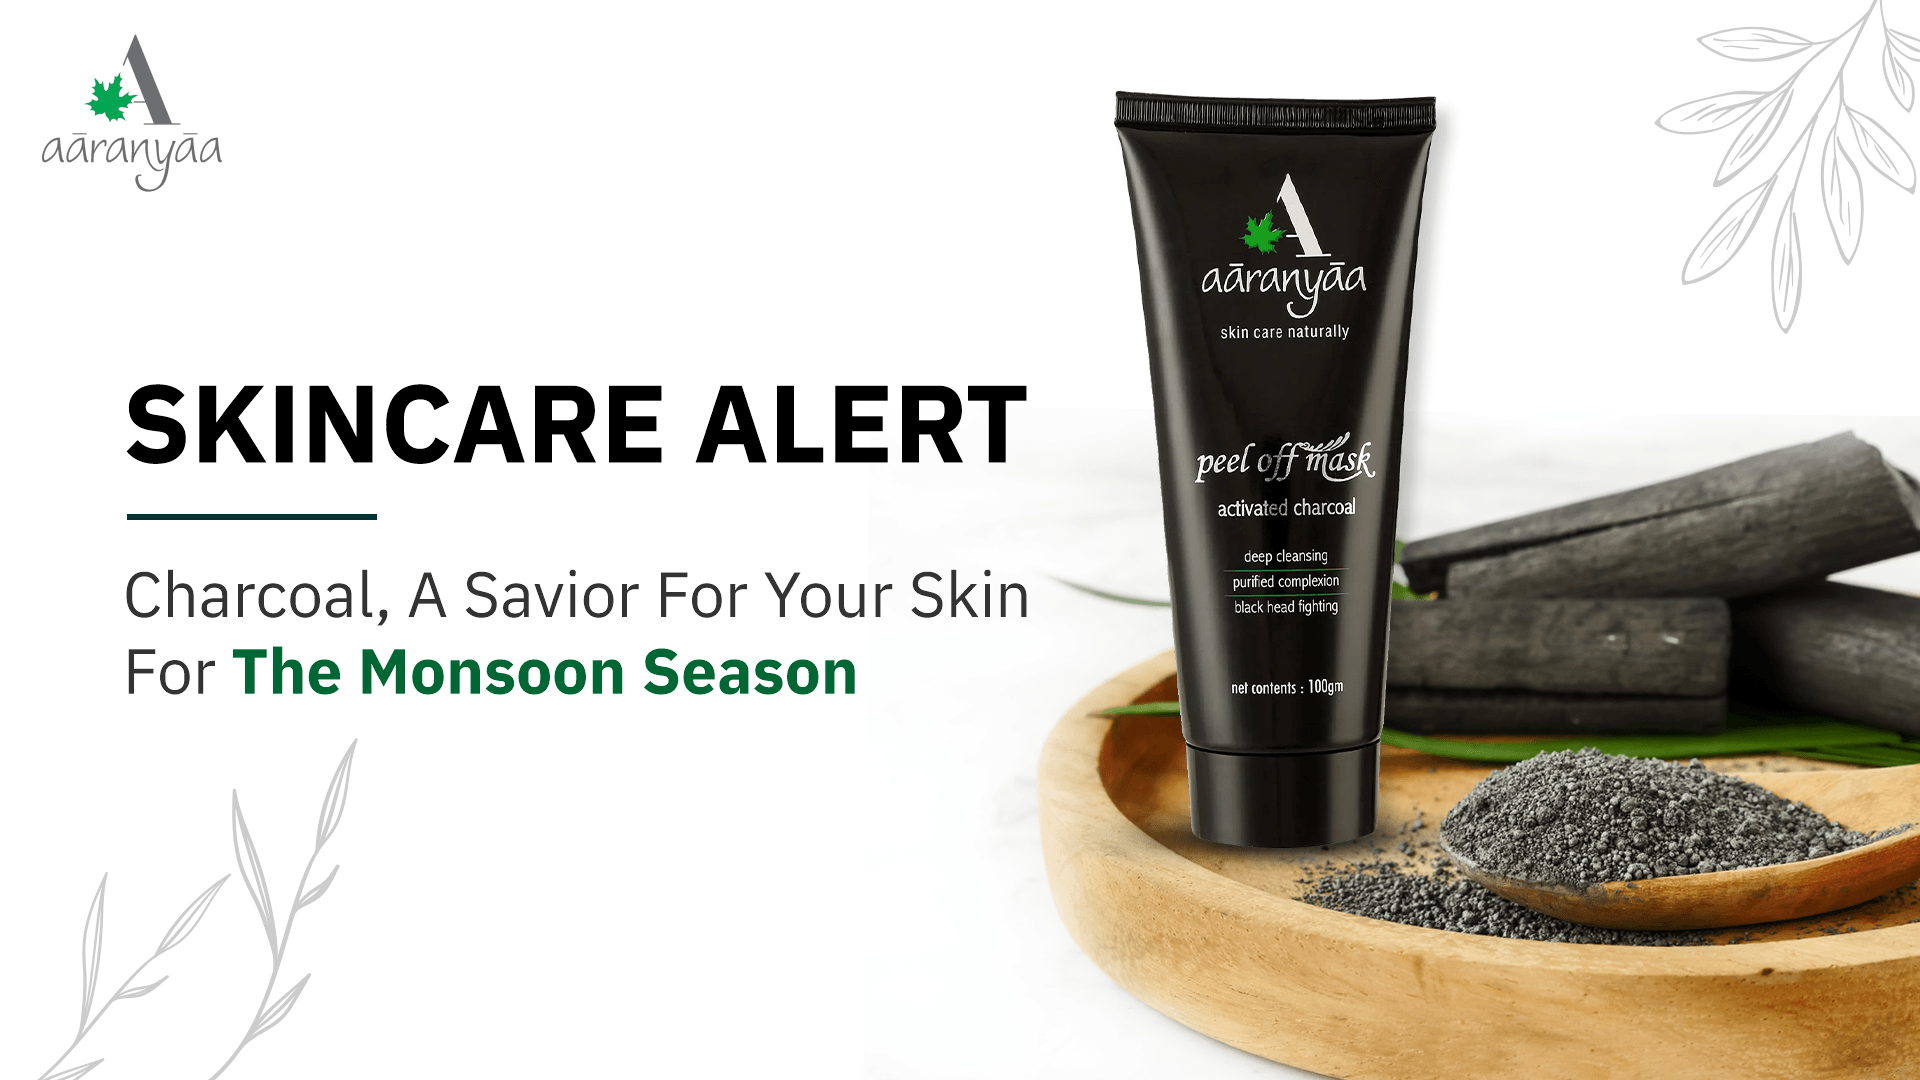 Skincare Alert: Charcoal, A Savior For Your Skin For The Monsoon Season - aaranyaa skincare